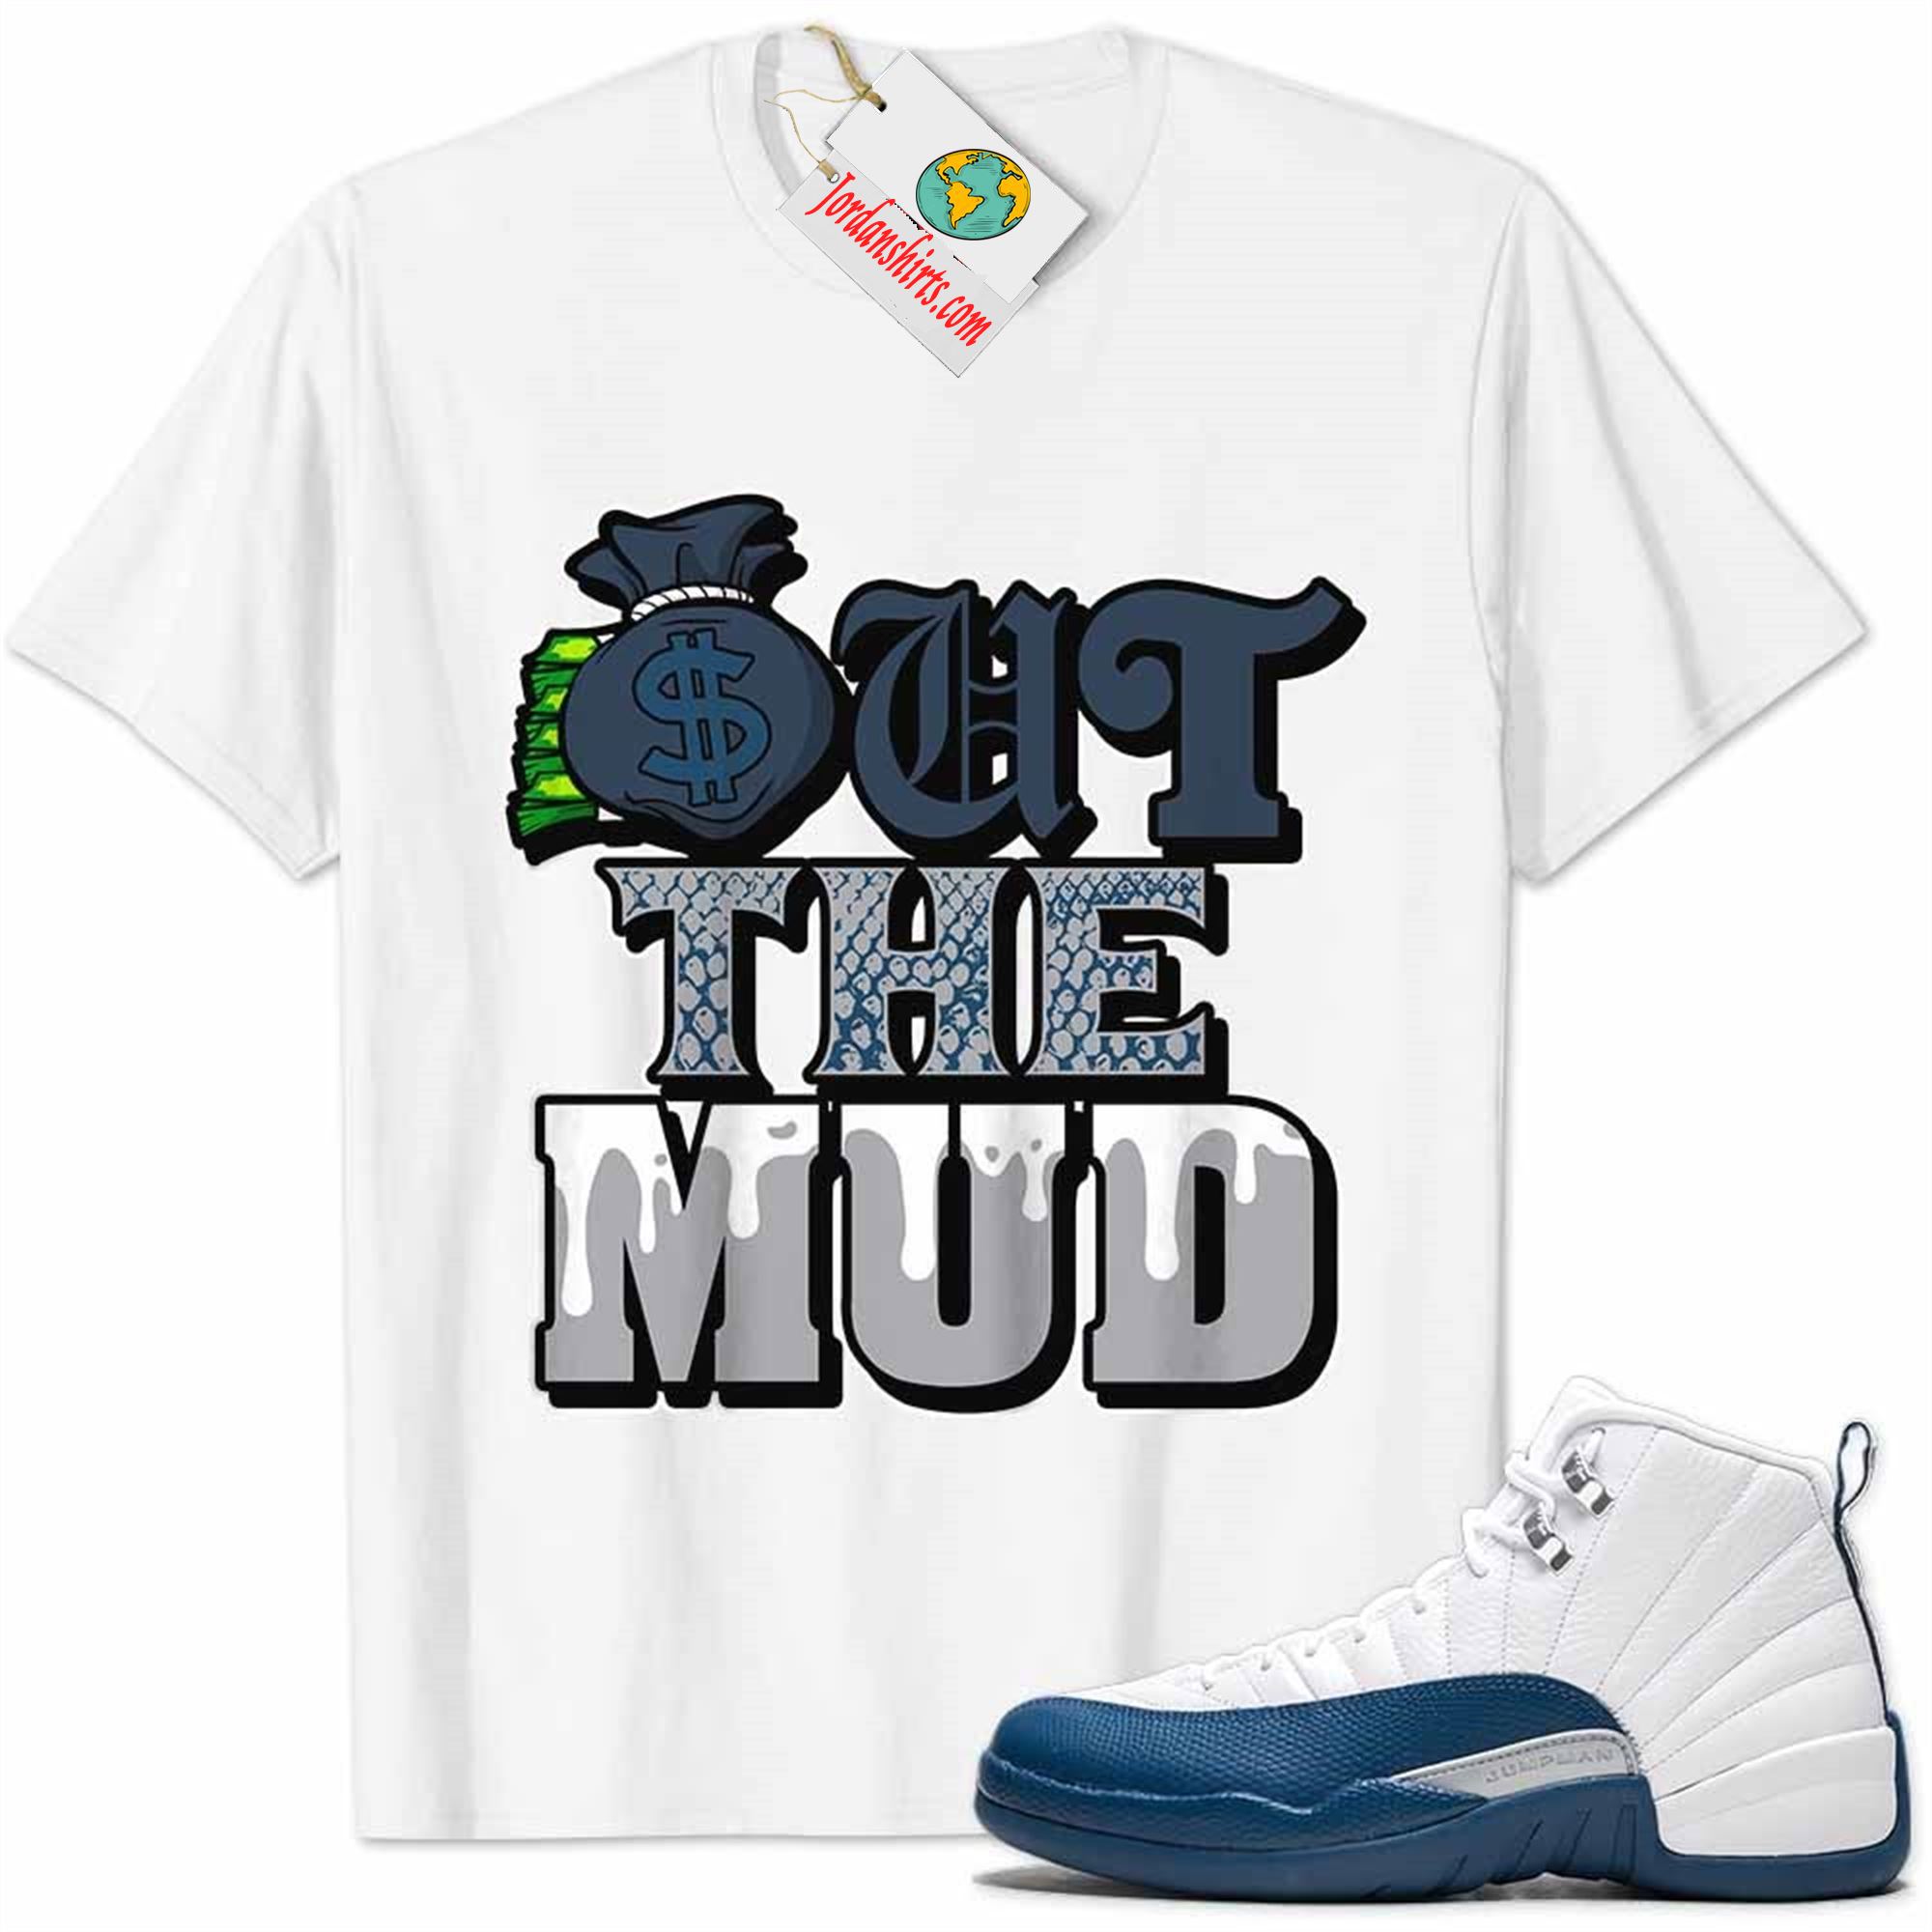 Jordan 12 Shirt, Jordan 12 French Blue Shirt Out The Mud Money Bag White Size Up To 5xl